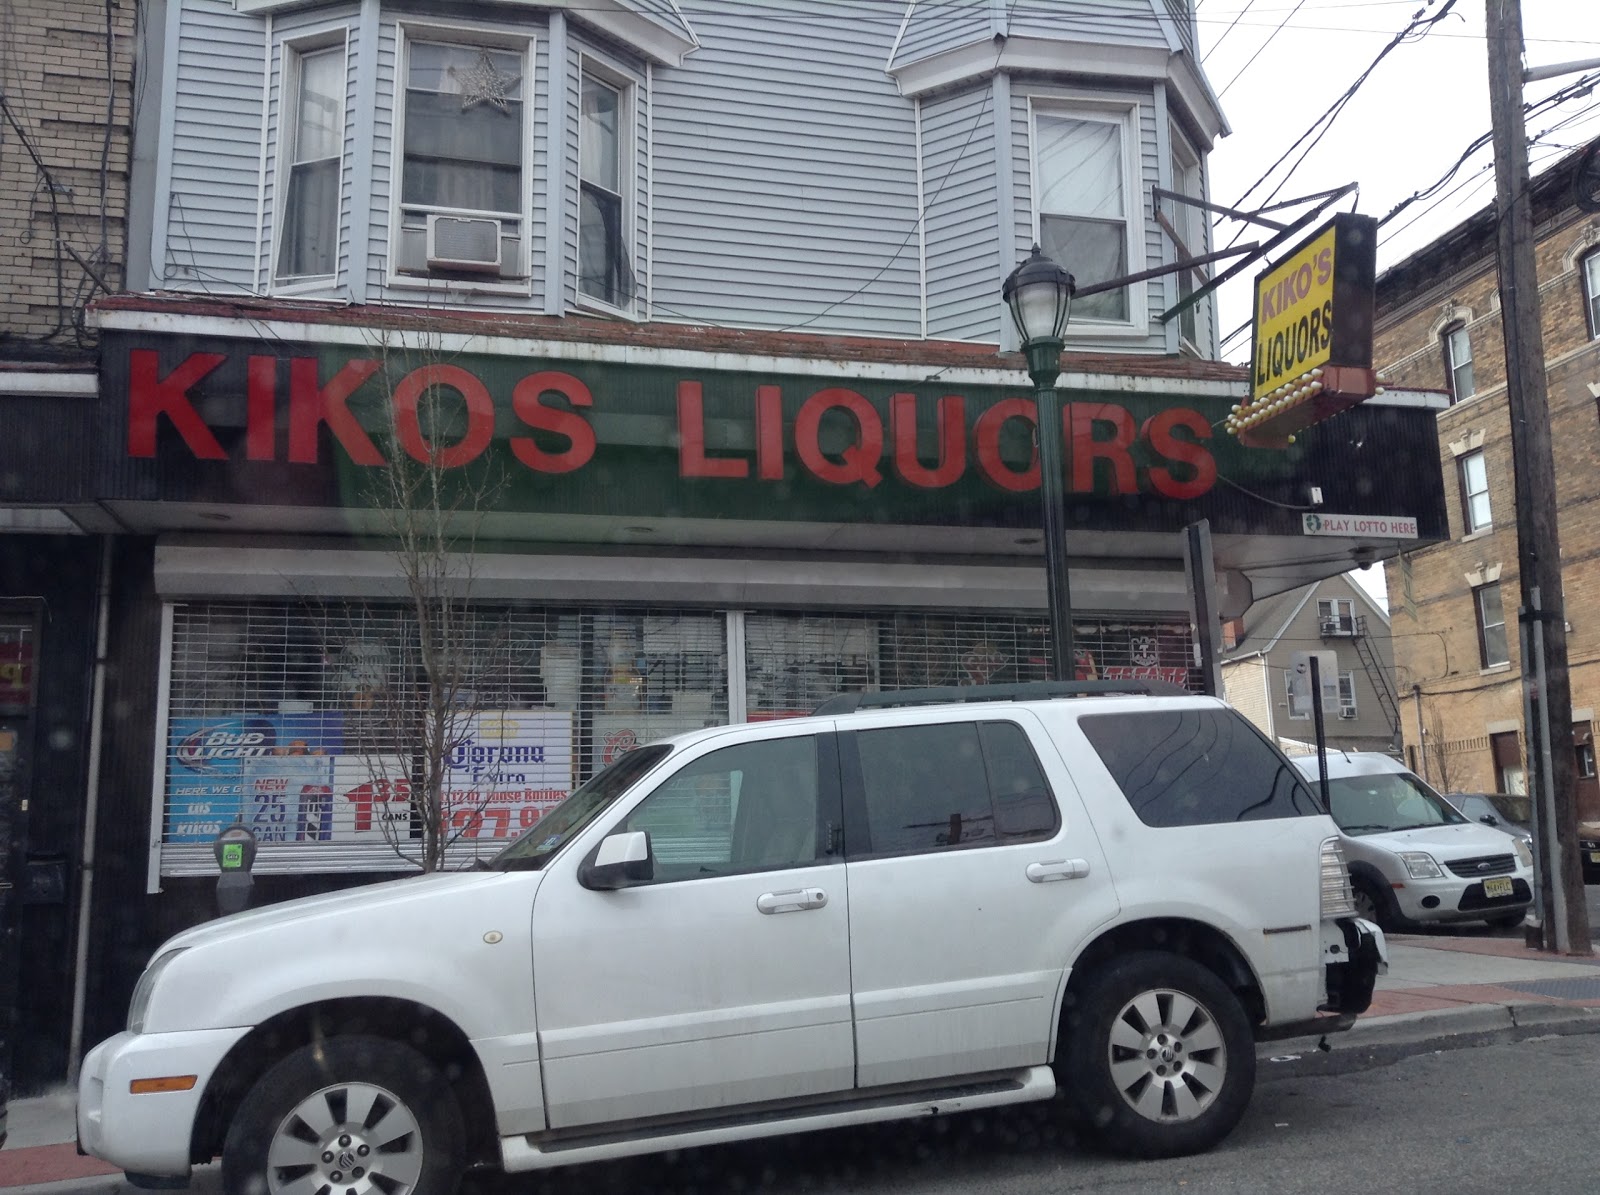 Photo of Kikos Liquors in Union City, New Jersey, United States - 1 Picture of Point of interest, Establishment, Finance, Store, Atm, Liquor store